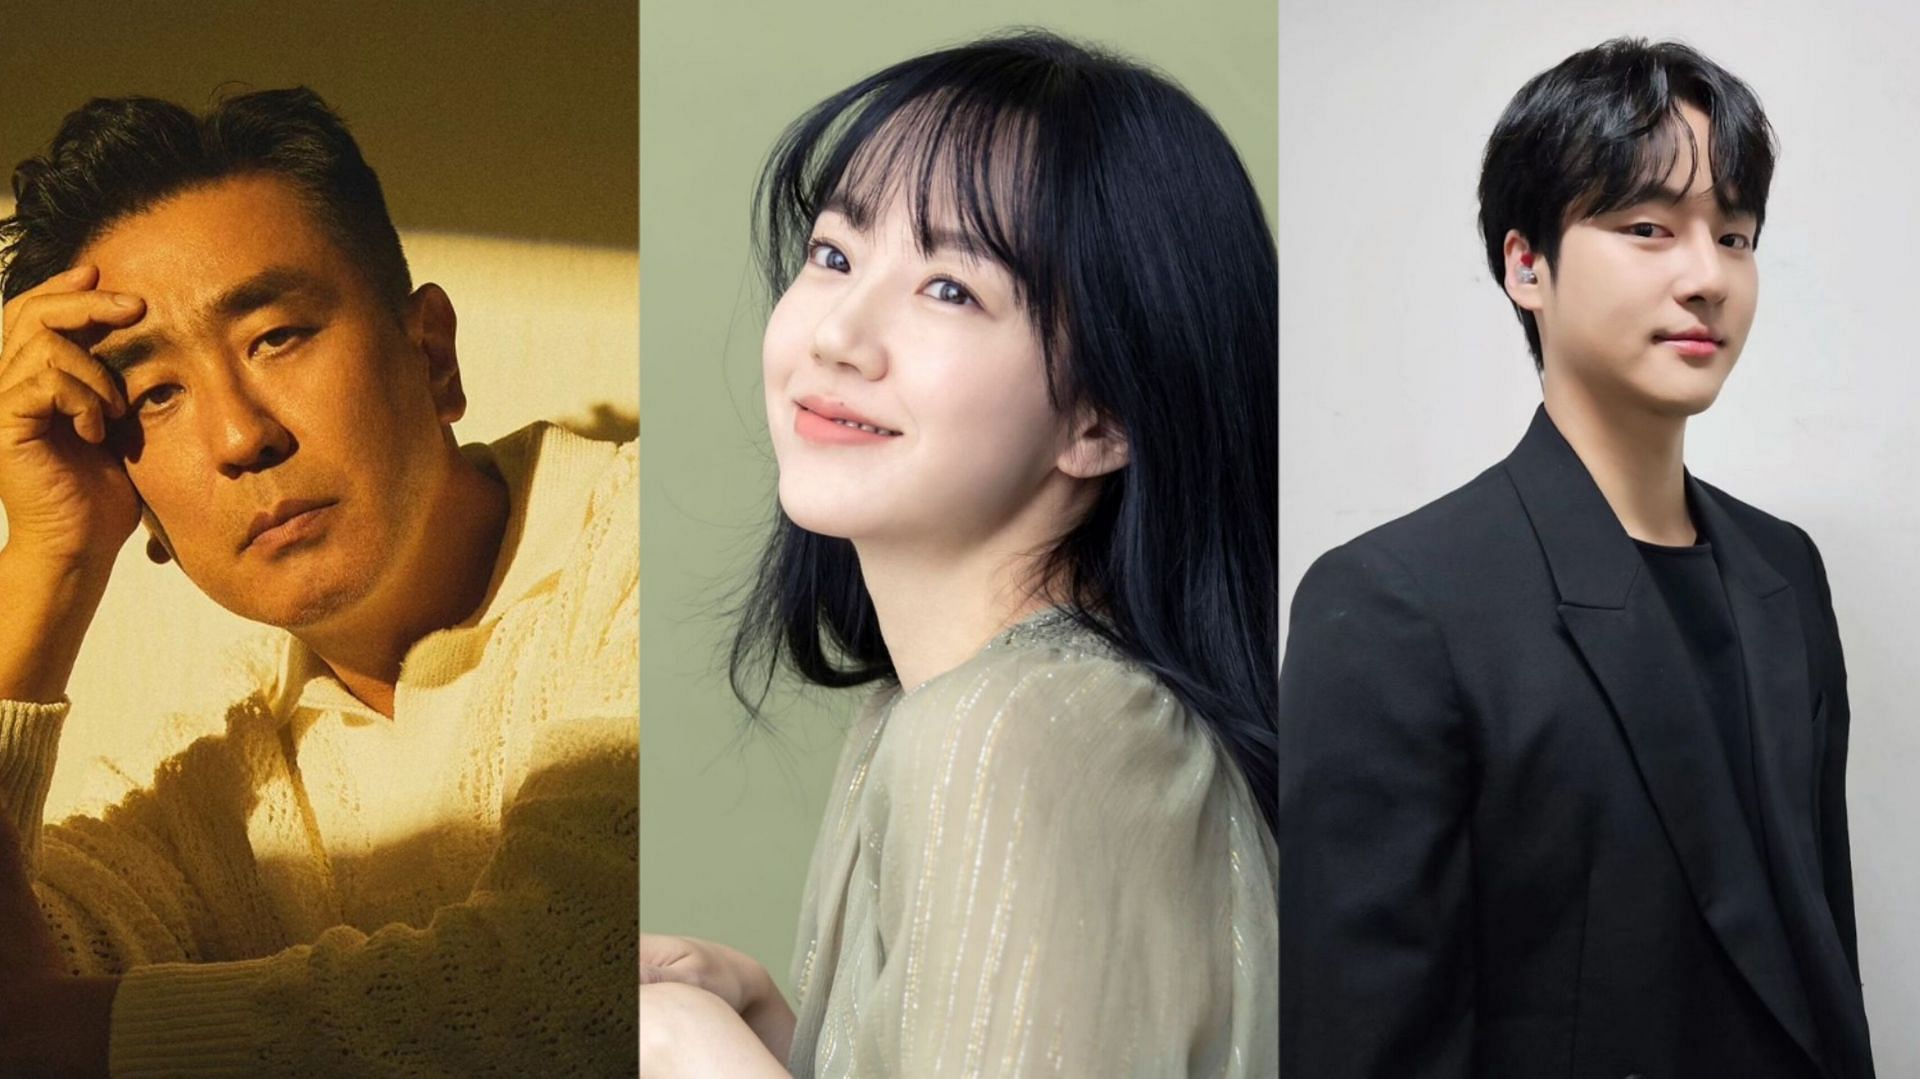 Featuring Ryu Seung-ryong, Im Soo-jung, and Yang Se-jong (Image via ryuseungryong, soojunglim_ and bell.ysj/Instagram)